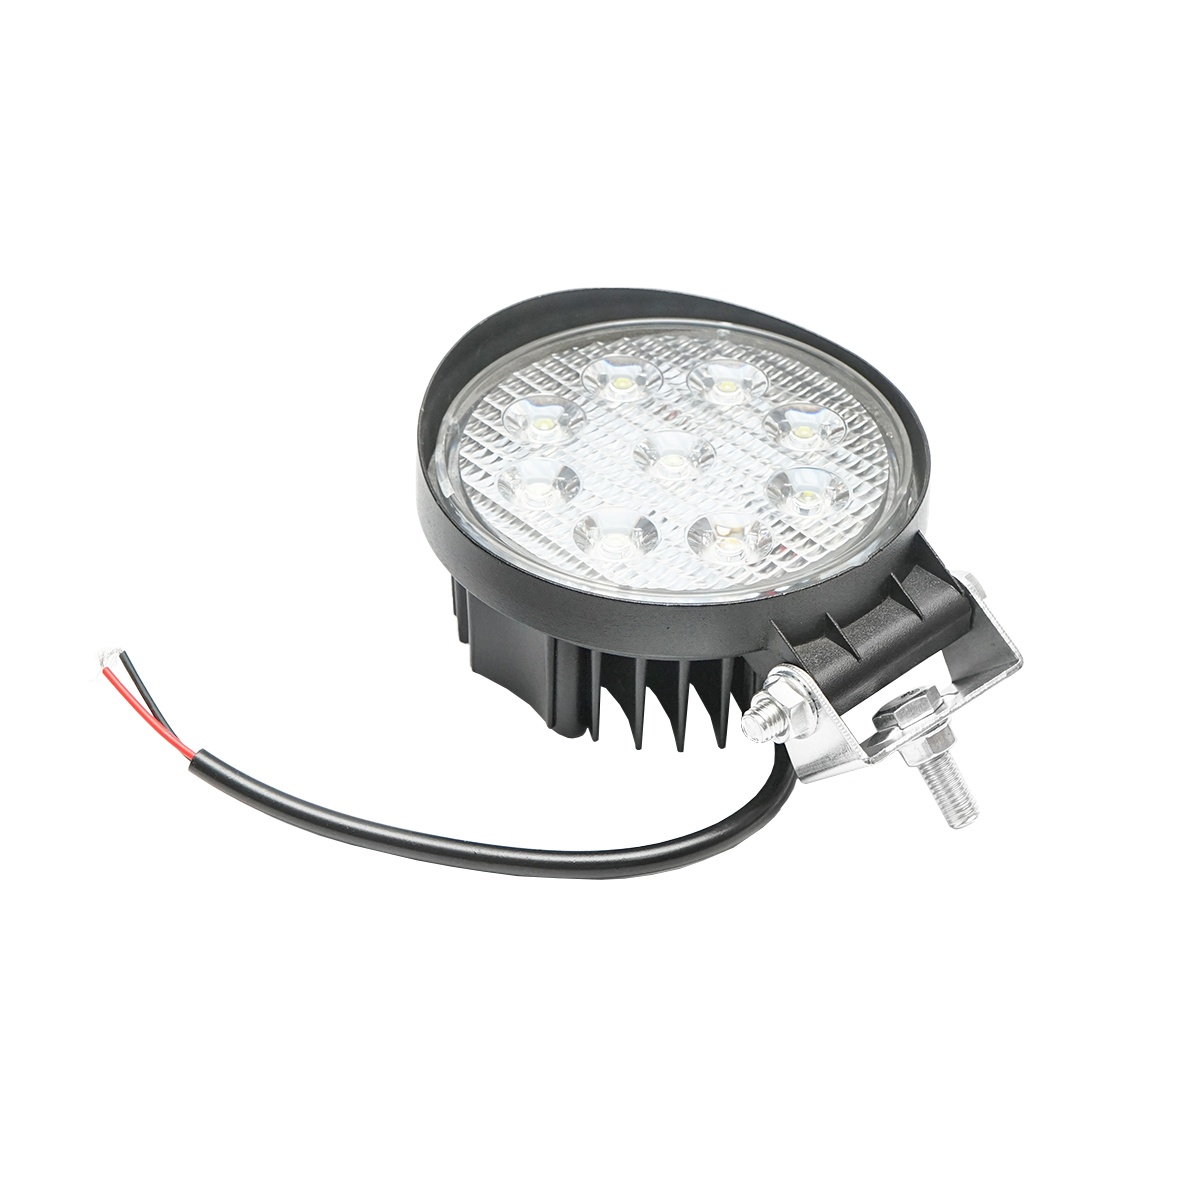 Lampa cu 9 LED-uri 10-60V 27W unghi radiere 60 de grade tip flood 6000K 107x107x51mm IP67 Breckner Germany